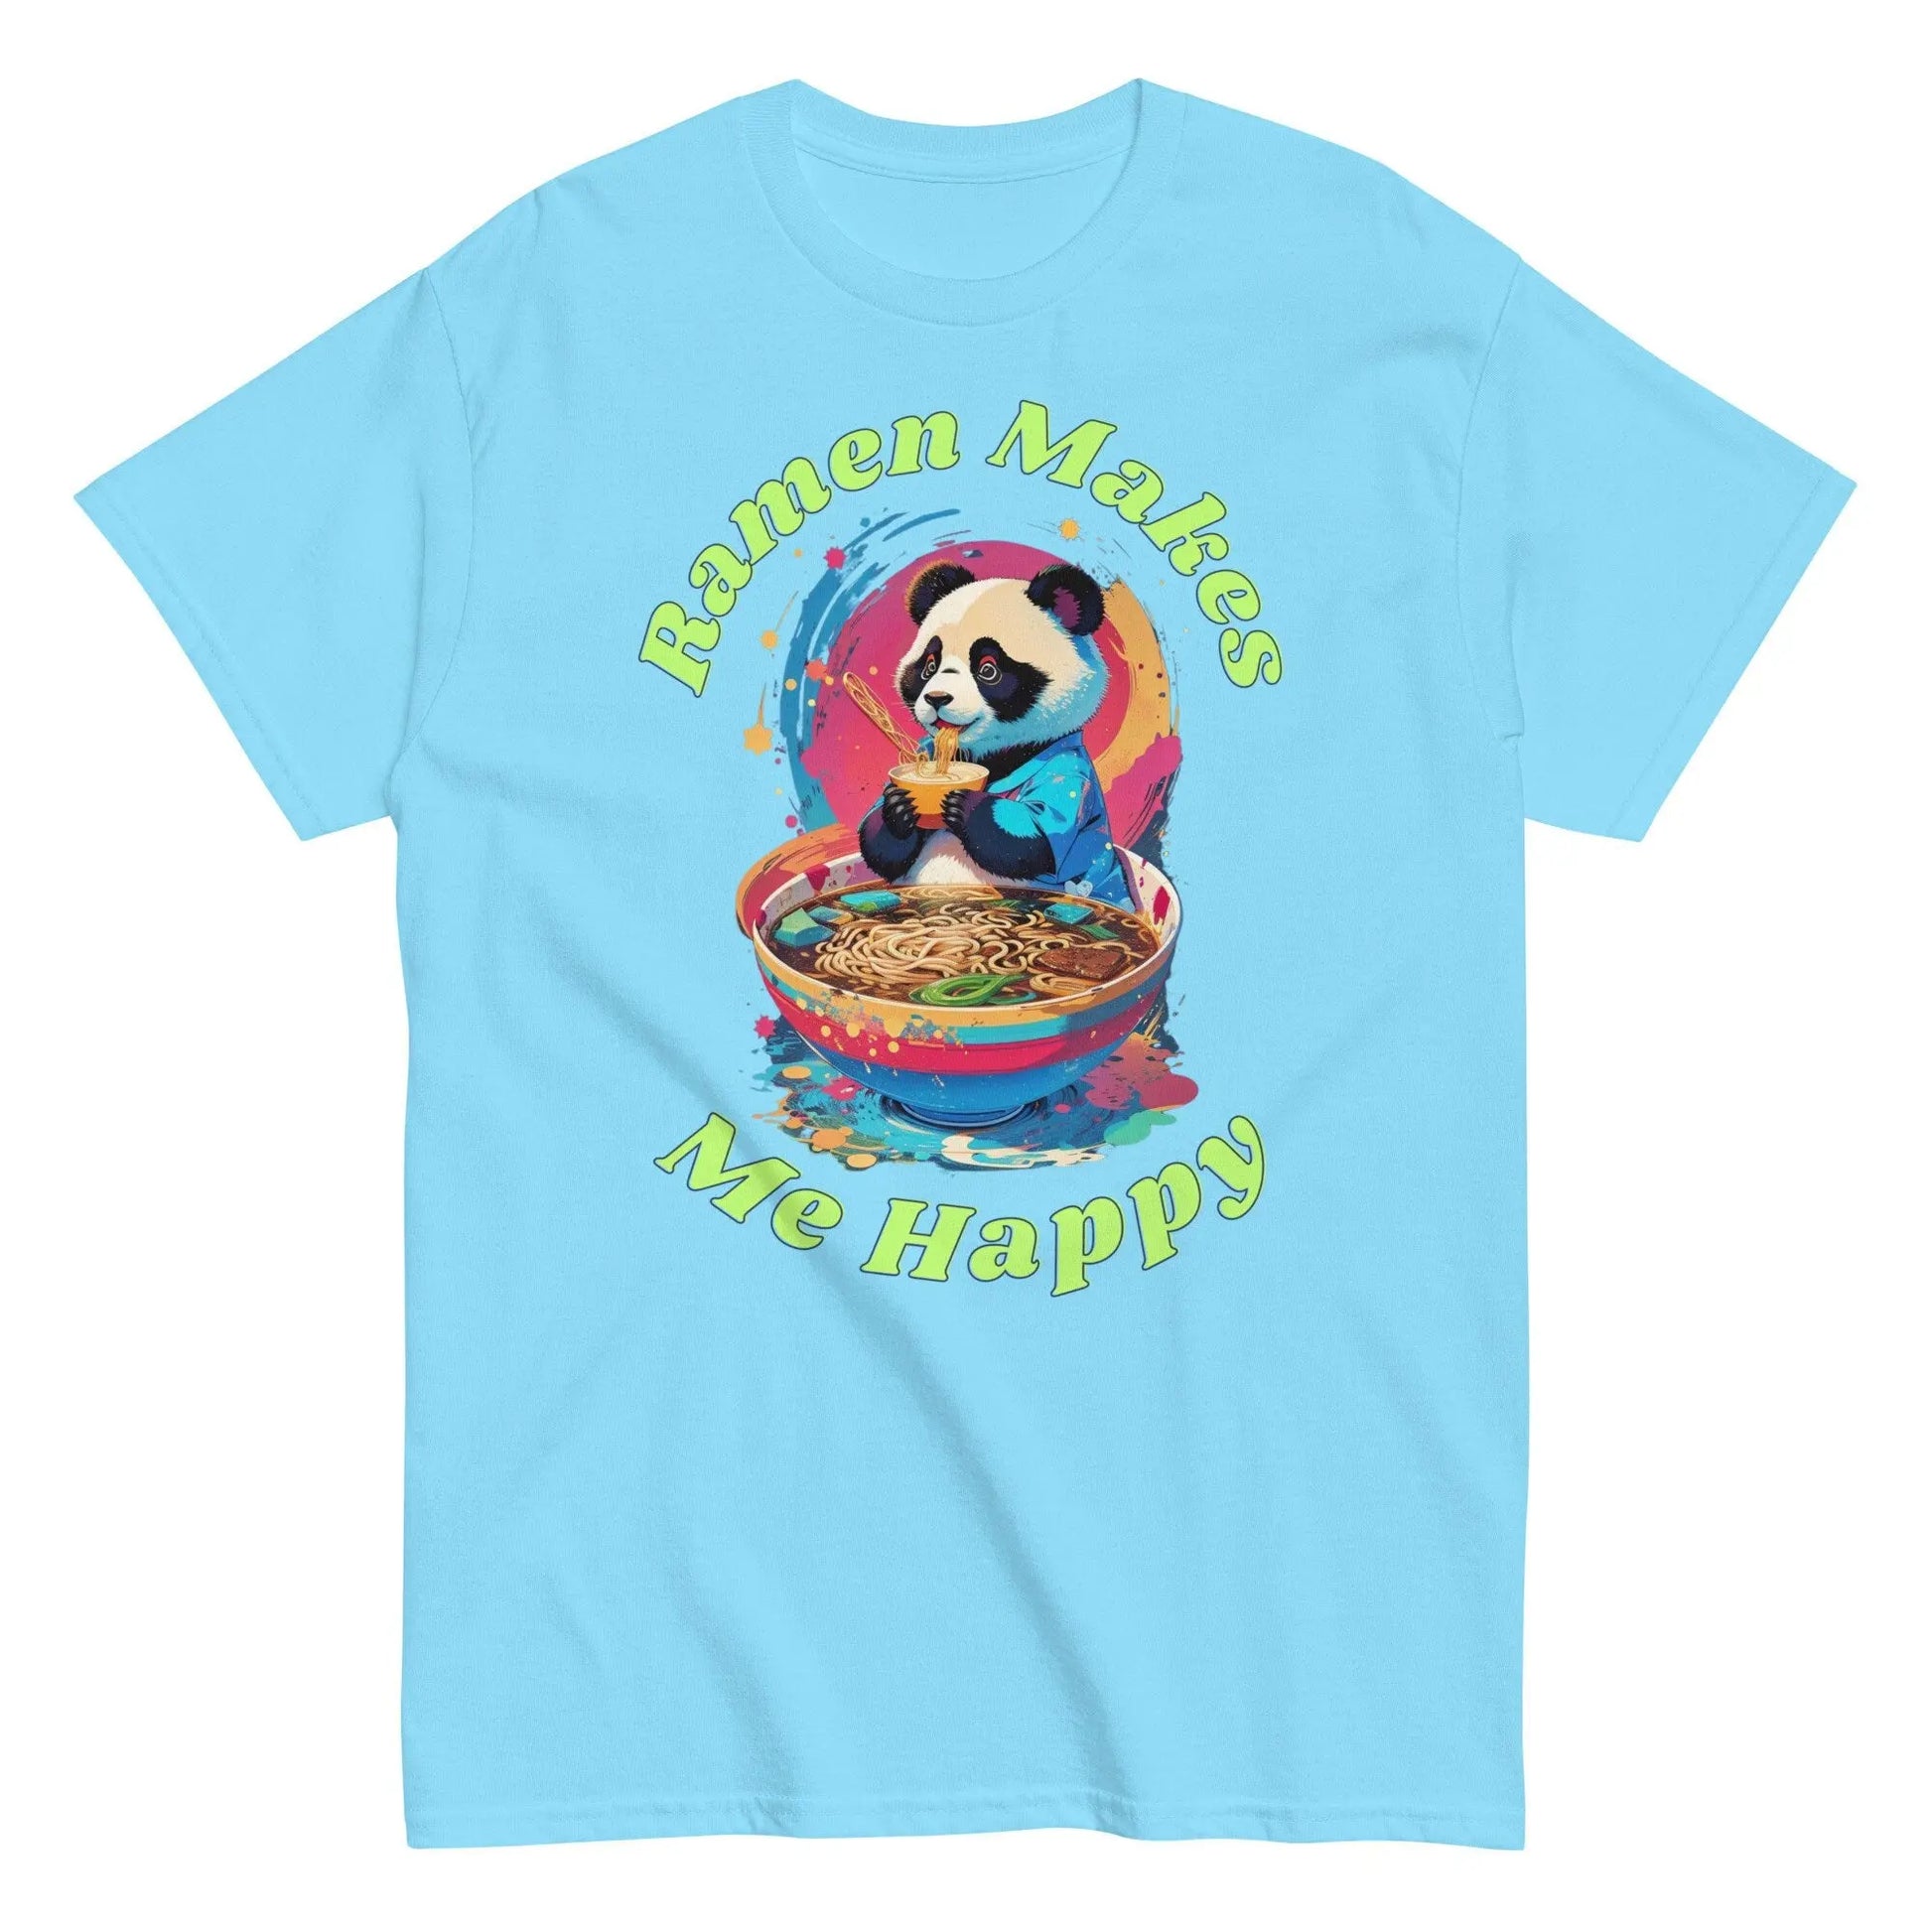 Ramen Delight: A Panda&#39;s Culinary Adventure on a T-Shirt